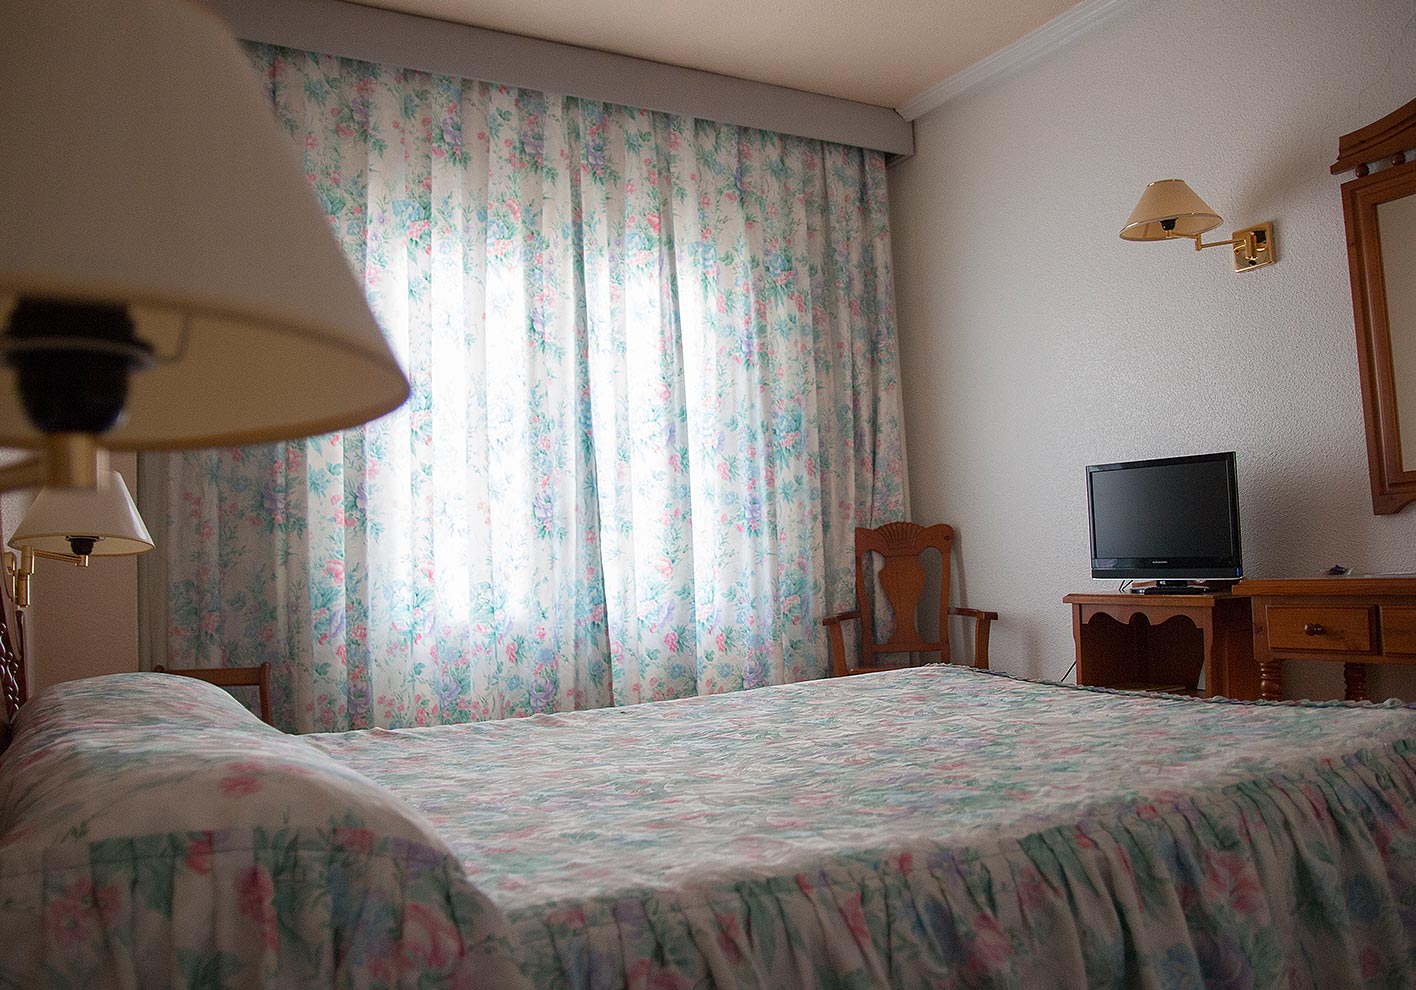 Separate Beds Room at Hotel Restaurante Terraza Carmona in Vera, Almeria